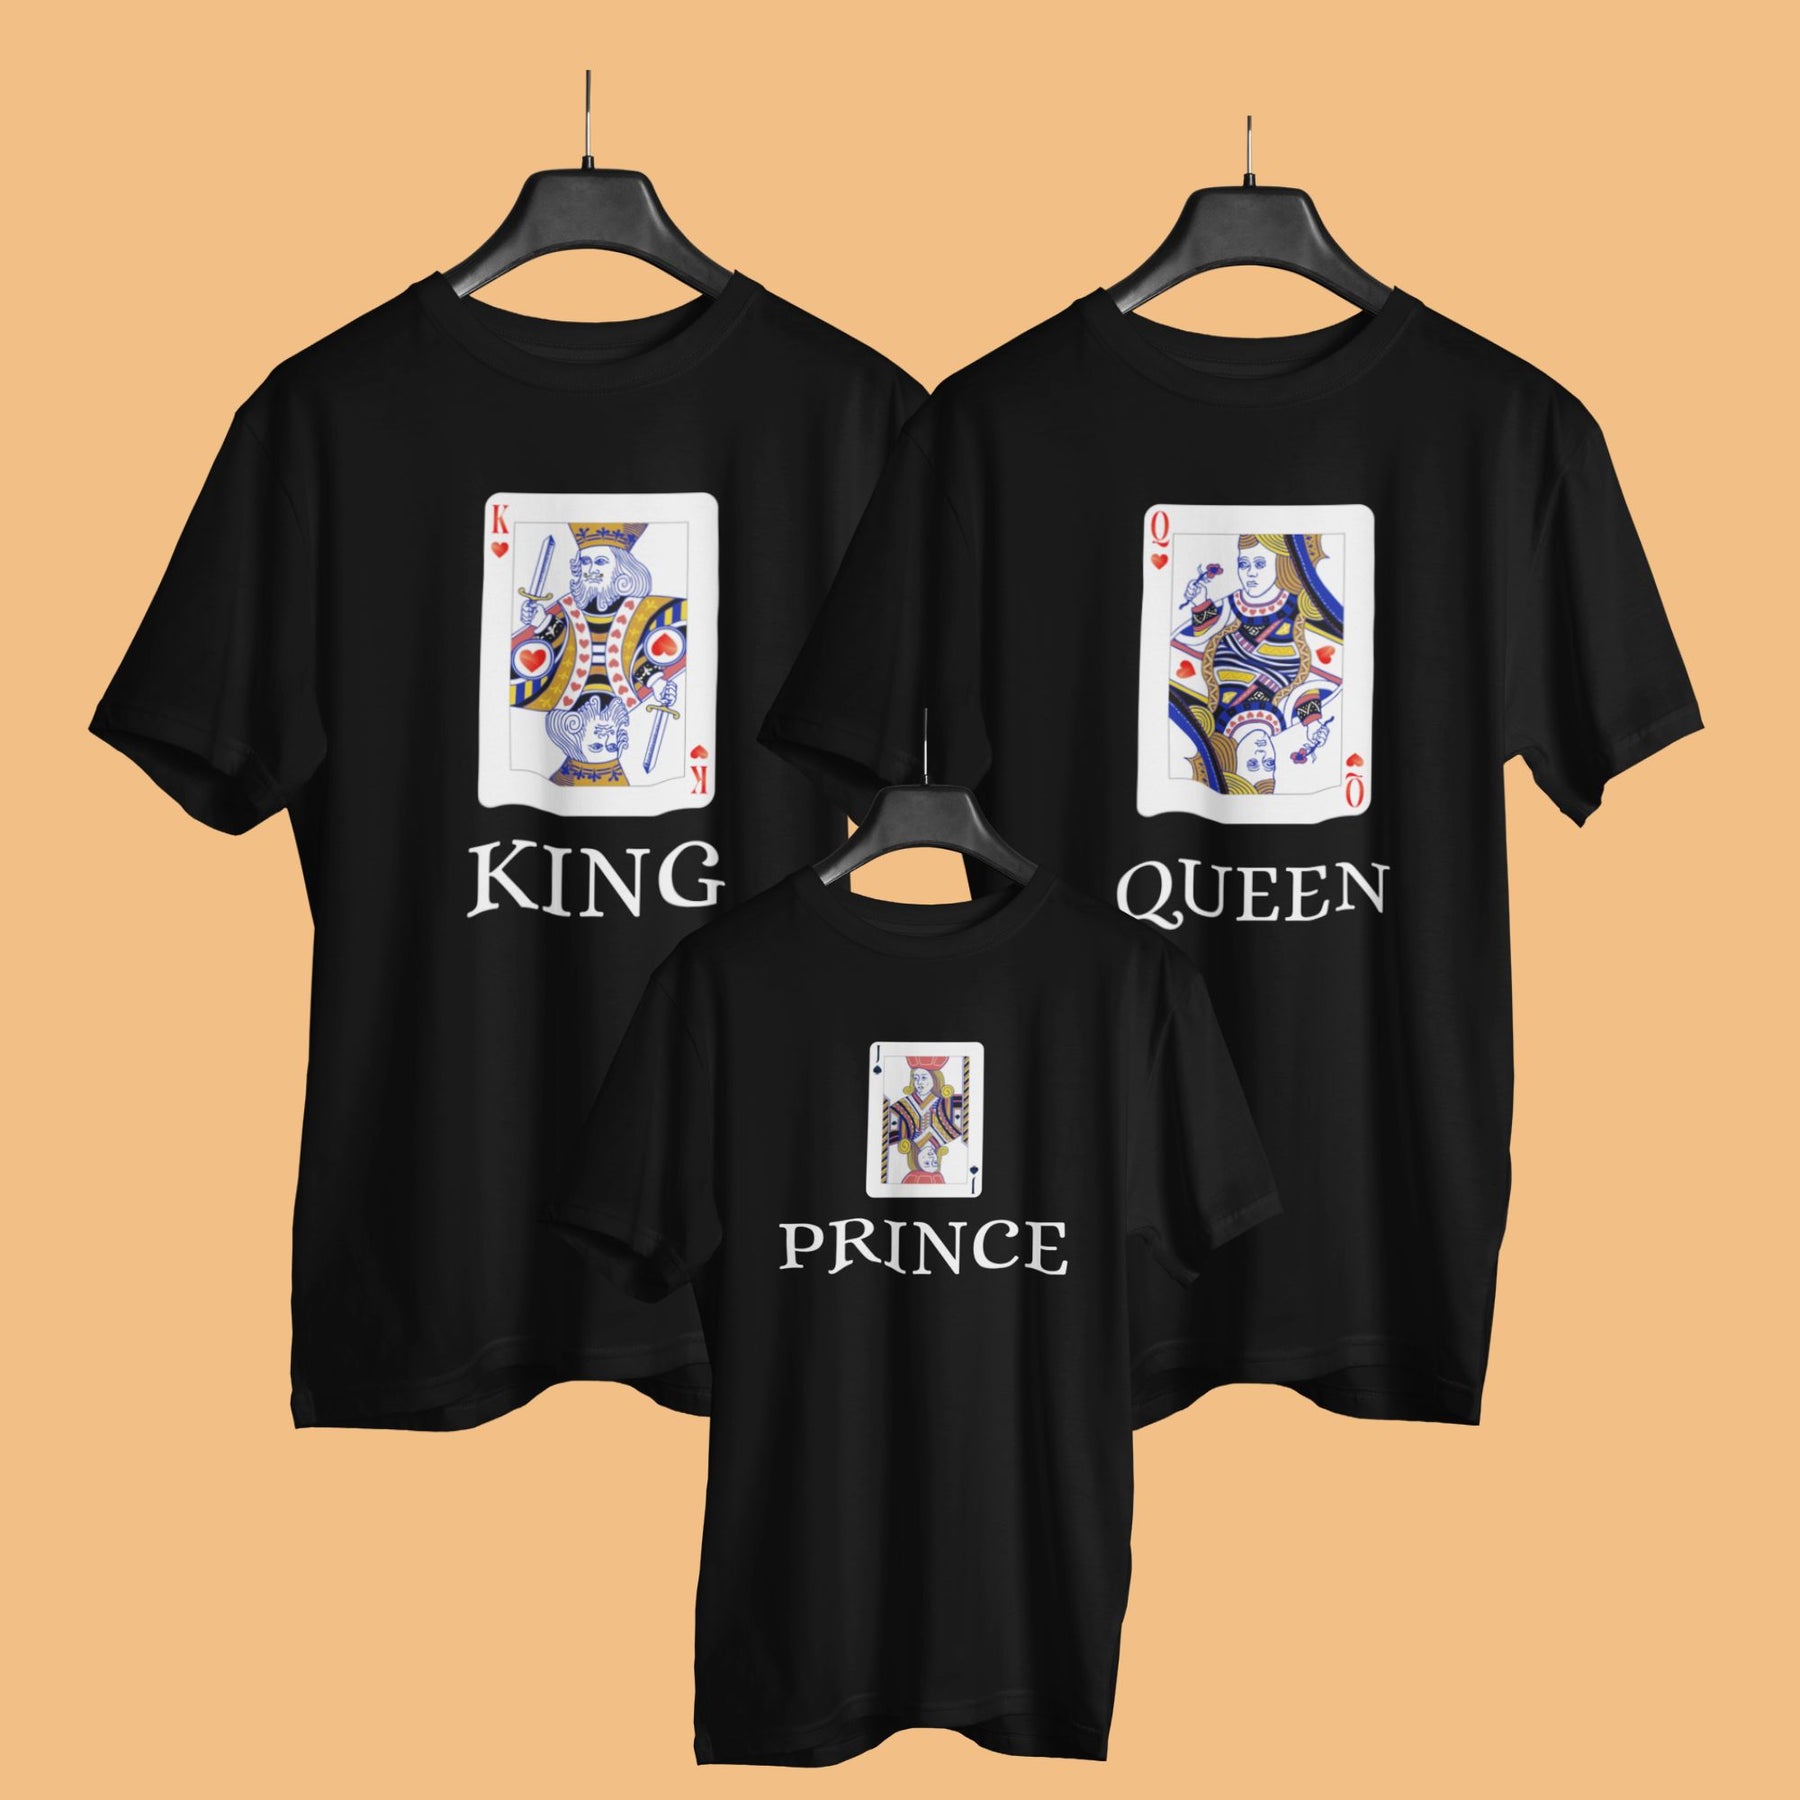 king-matching-family-black-t-shirts-for-mom-dad-daughter-gogirgit-hanger